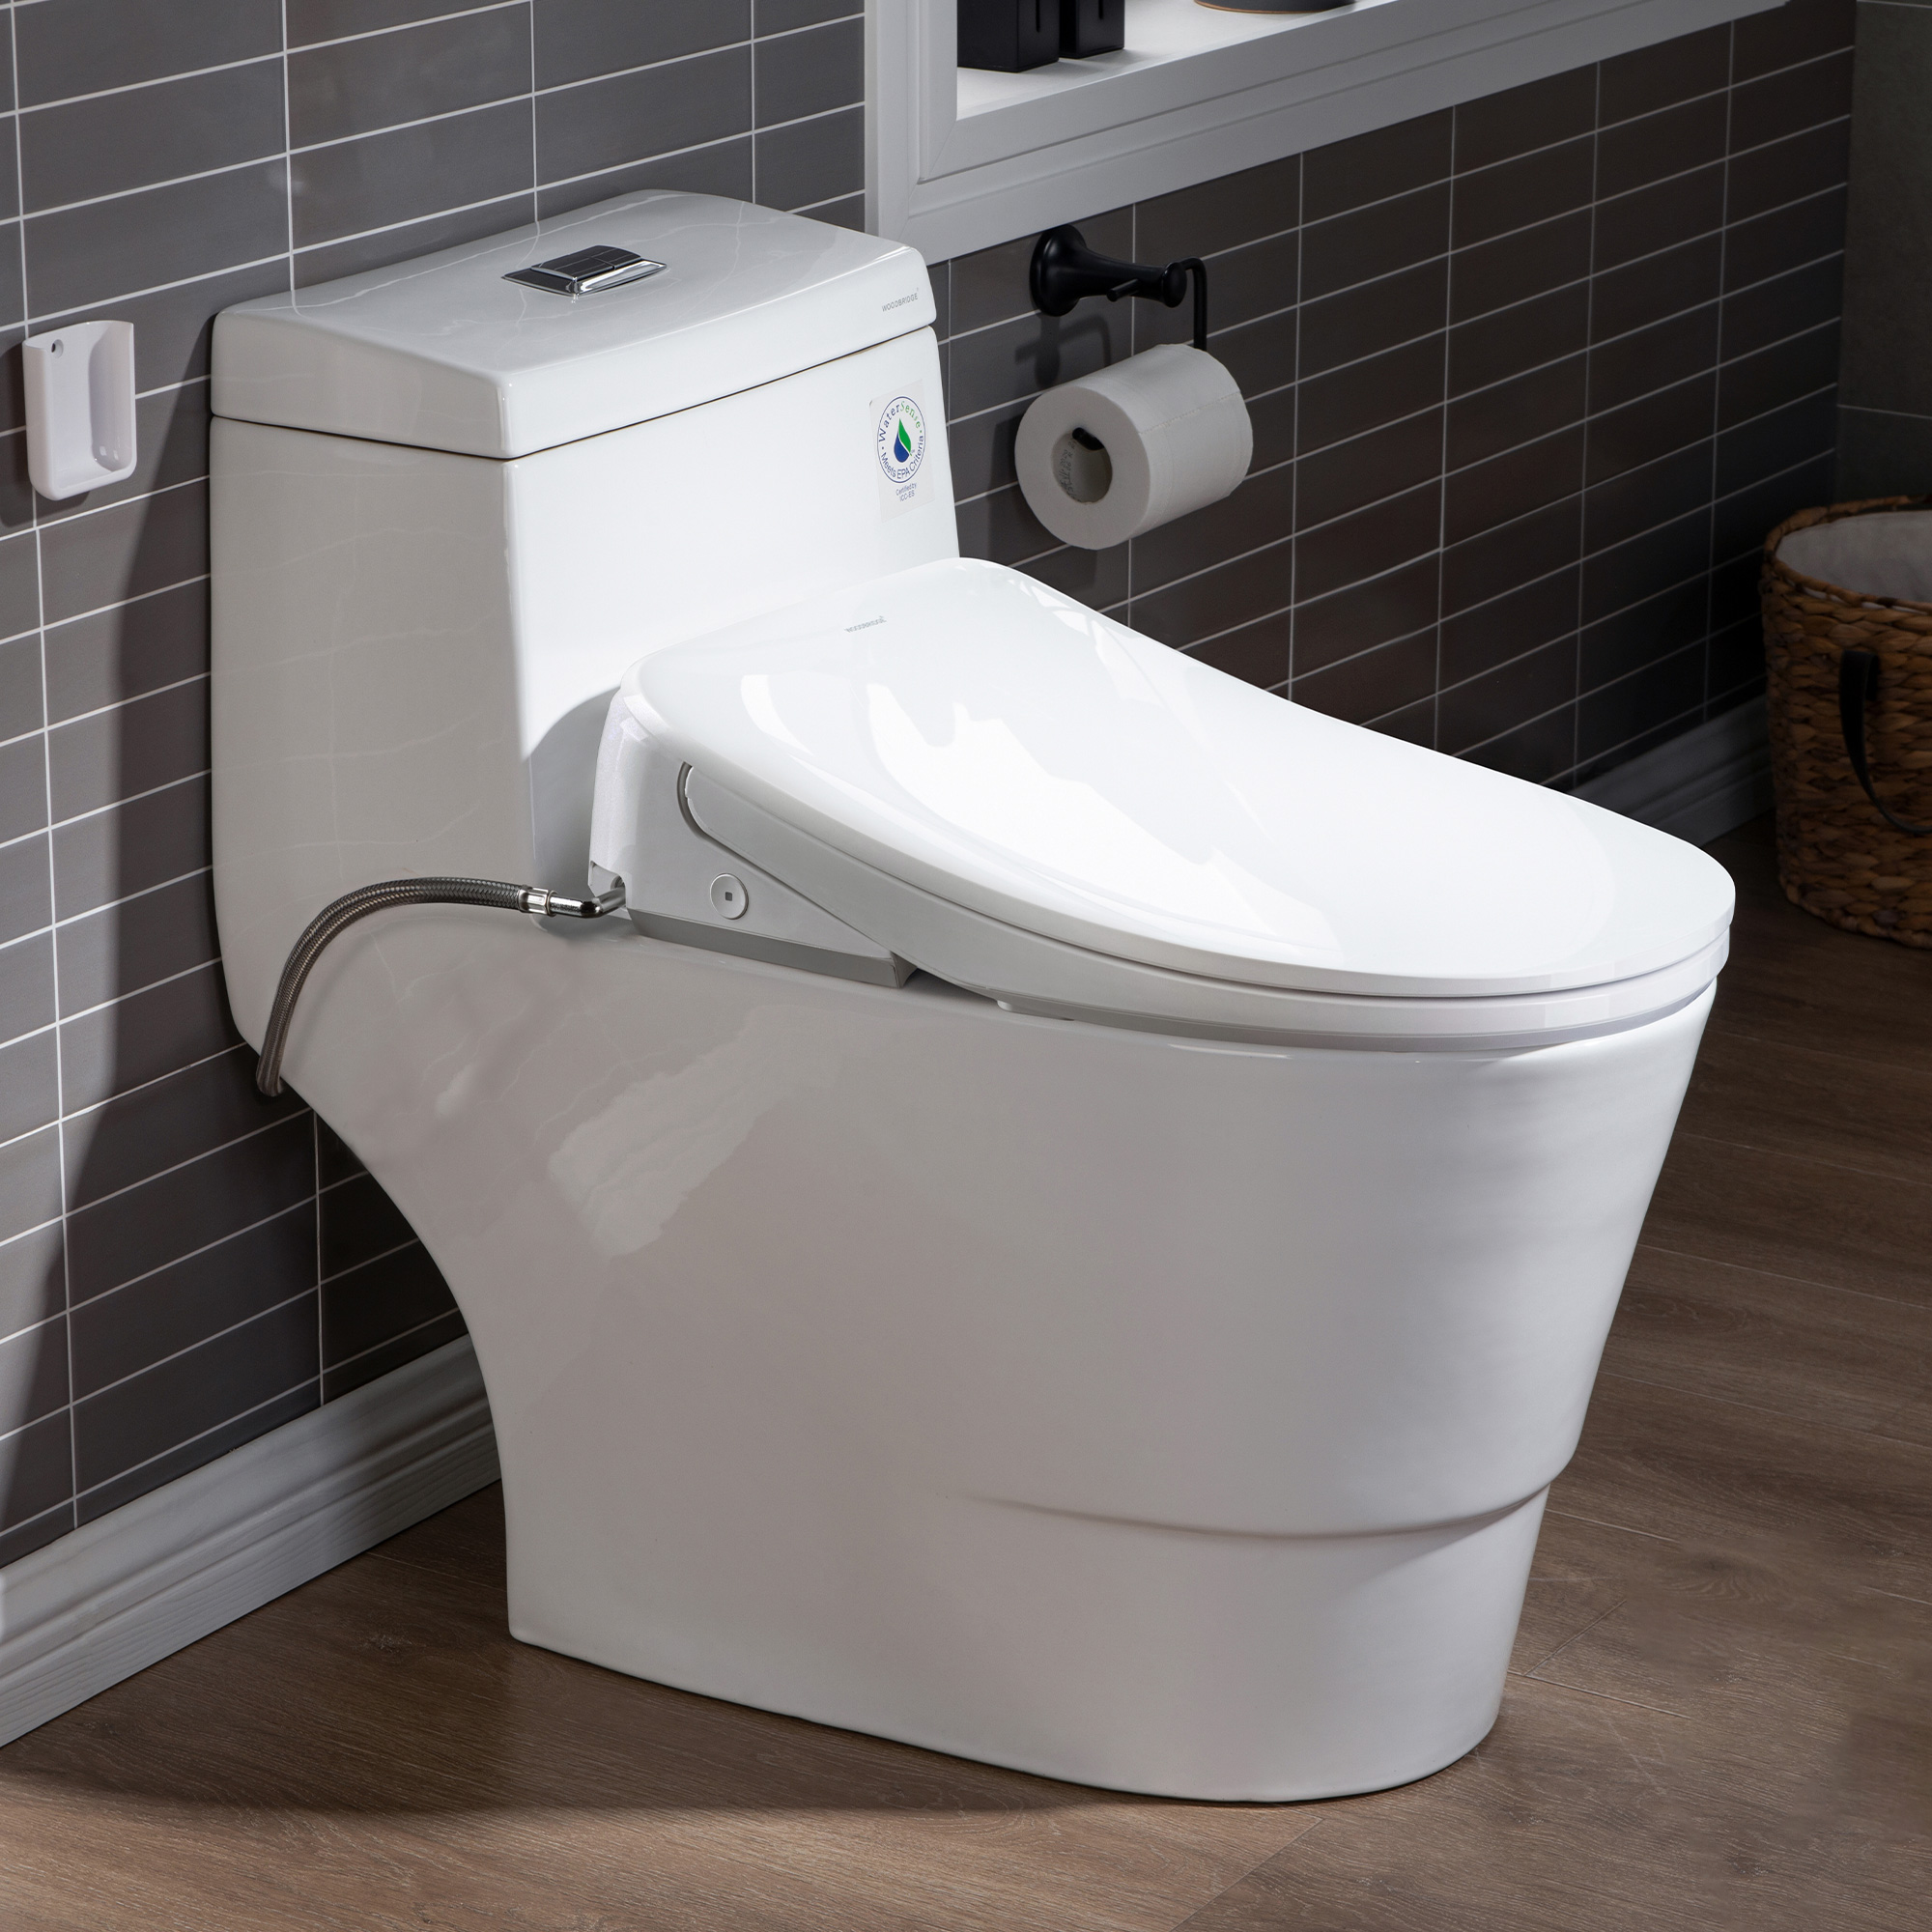 WOODBRIDGE Elongated 1-Piece Toilet with Advanced Auto Open & Close Bidet Smart Toilet Seat, Child Wash, Chair Height, 1000 Gram MaP Flushing Score, 1.28 GPF Dual, Water Sensed